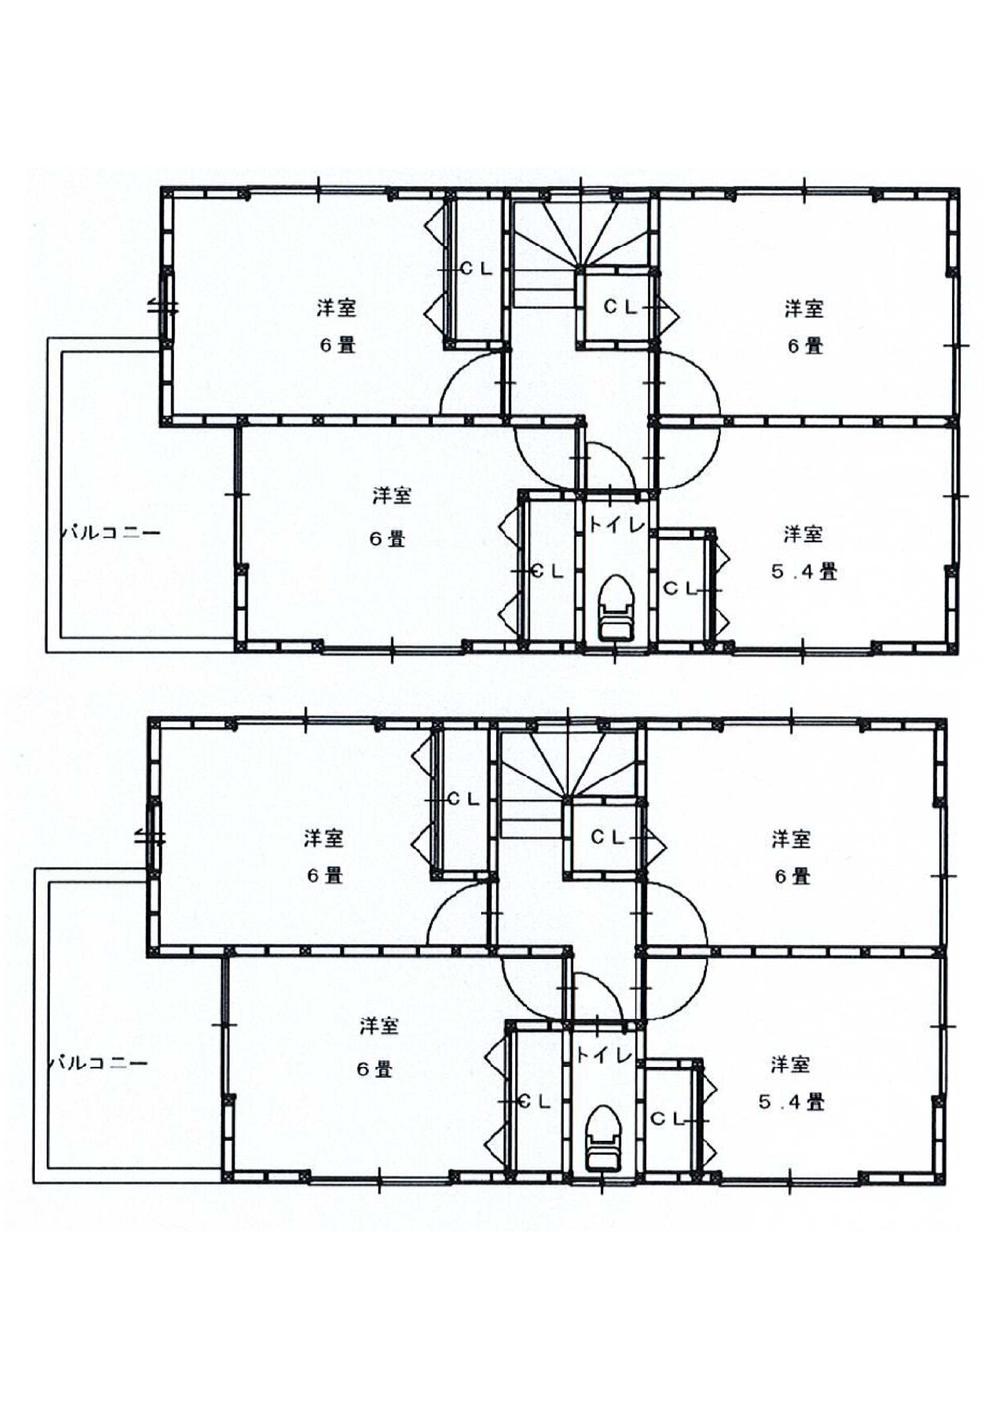 Building plan example (floor plan). Building plan example (6 Building) 4LDK, Land price 25,300,000 yen, Land area 124.85 sq m , Building price 15 million yen, Building area 103.5 sq m